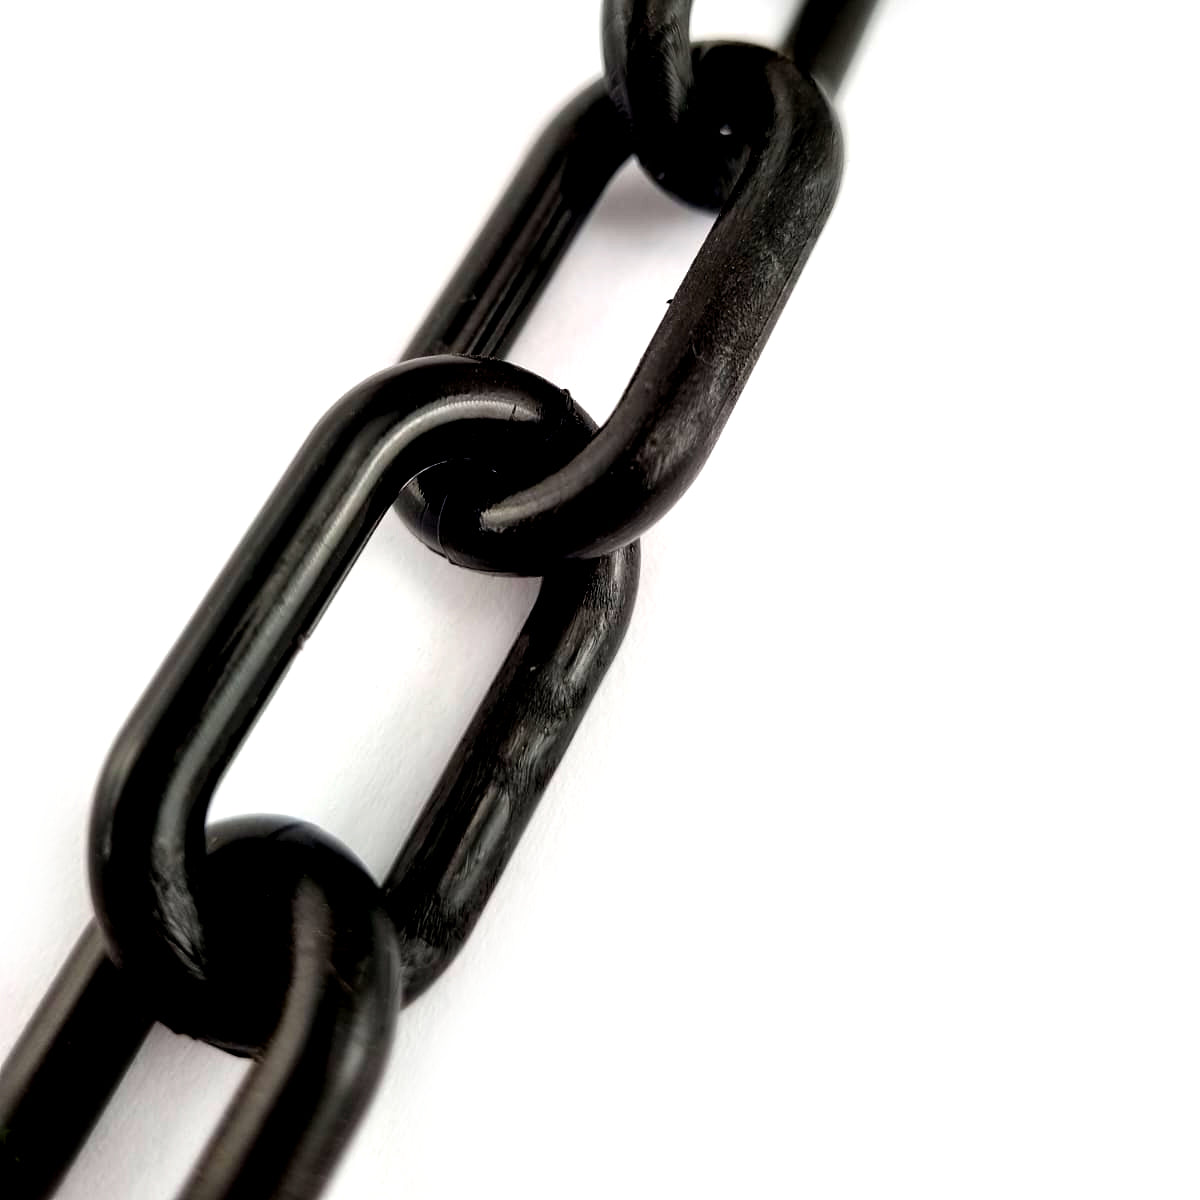 Black plastic chain size 6mm, order chain by the metre. Melbourne, Australia.